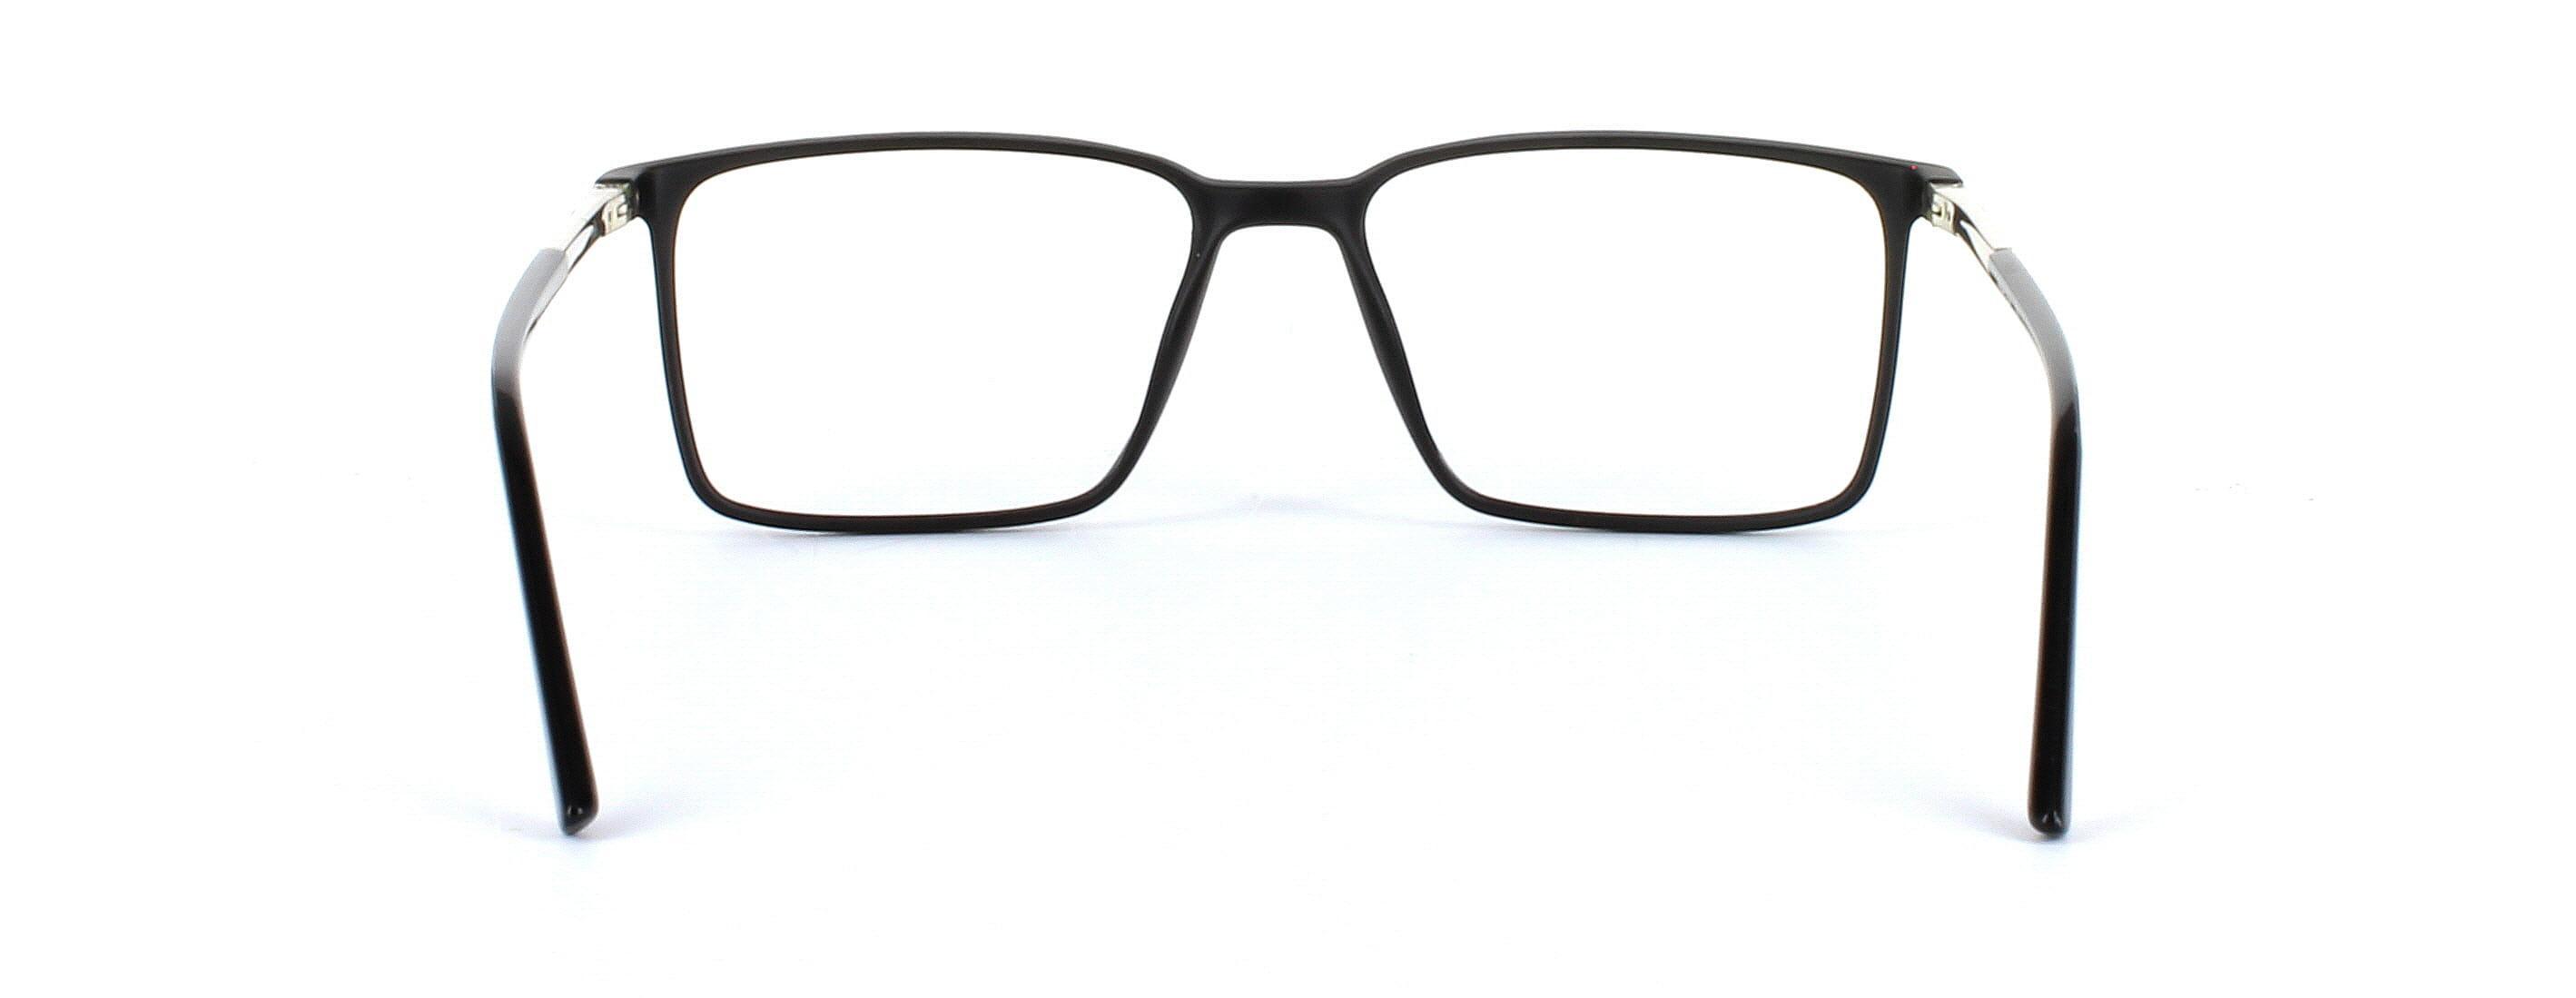 Preveza - Black unisex glasses - image view 3